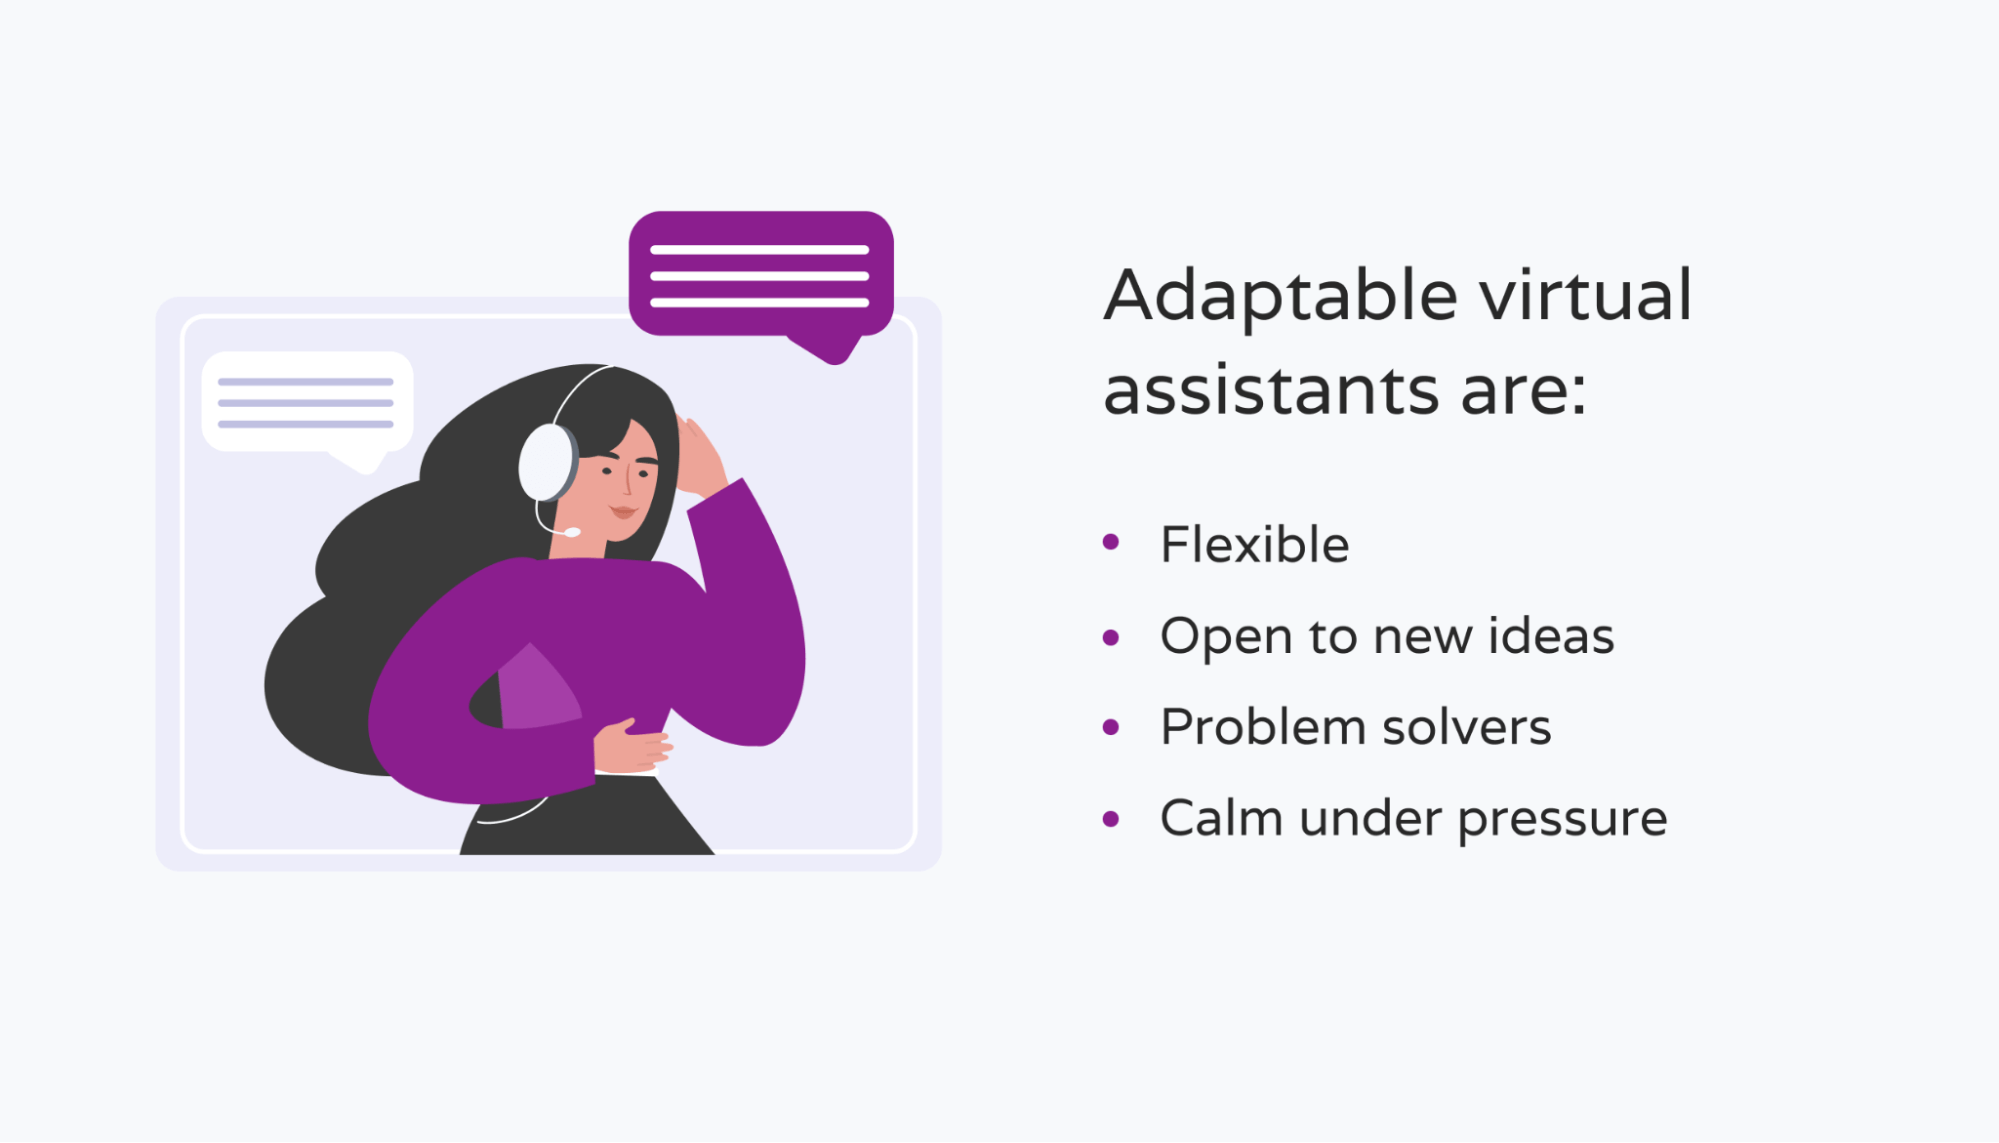 Virtual assistant adaptability skills